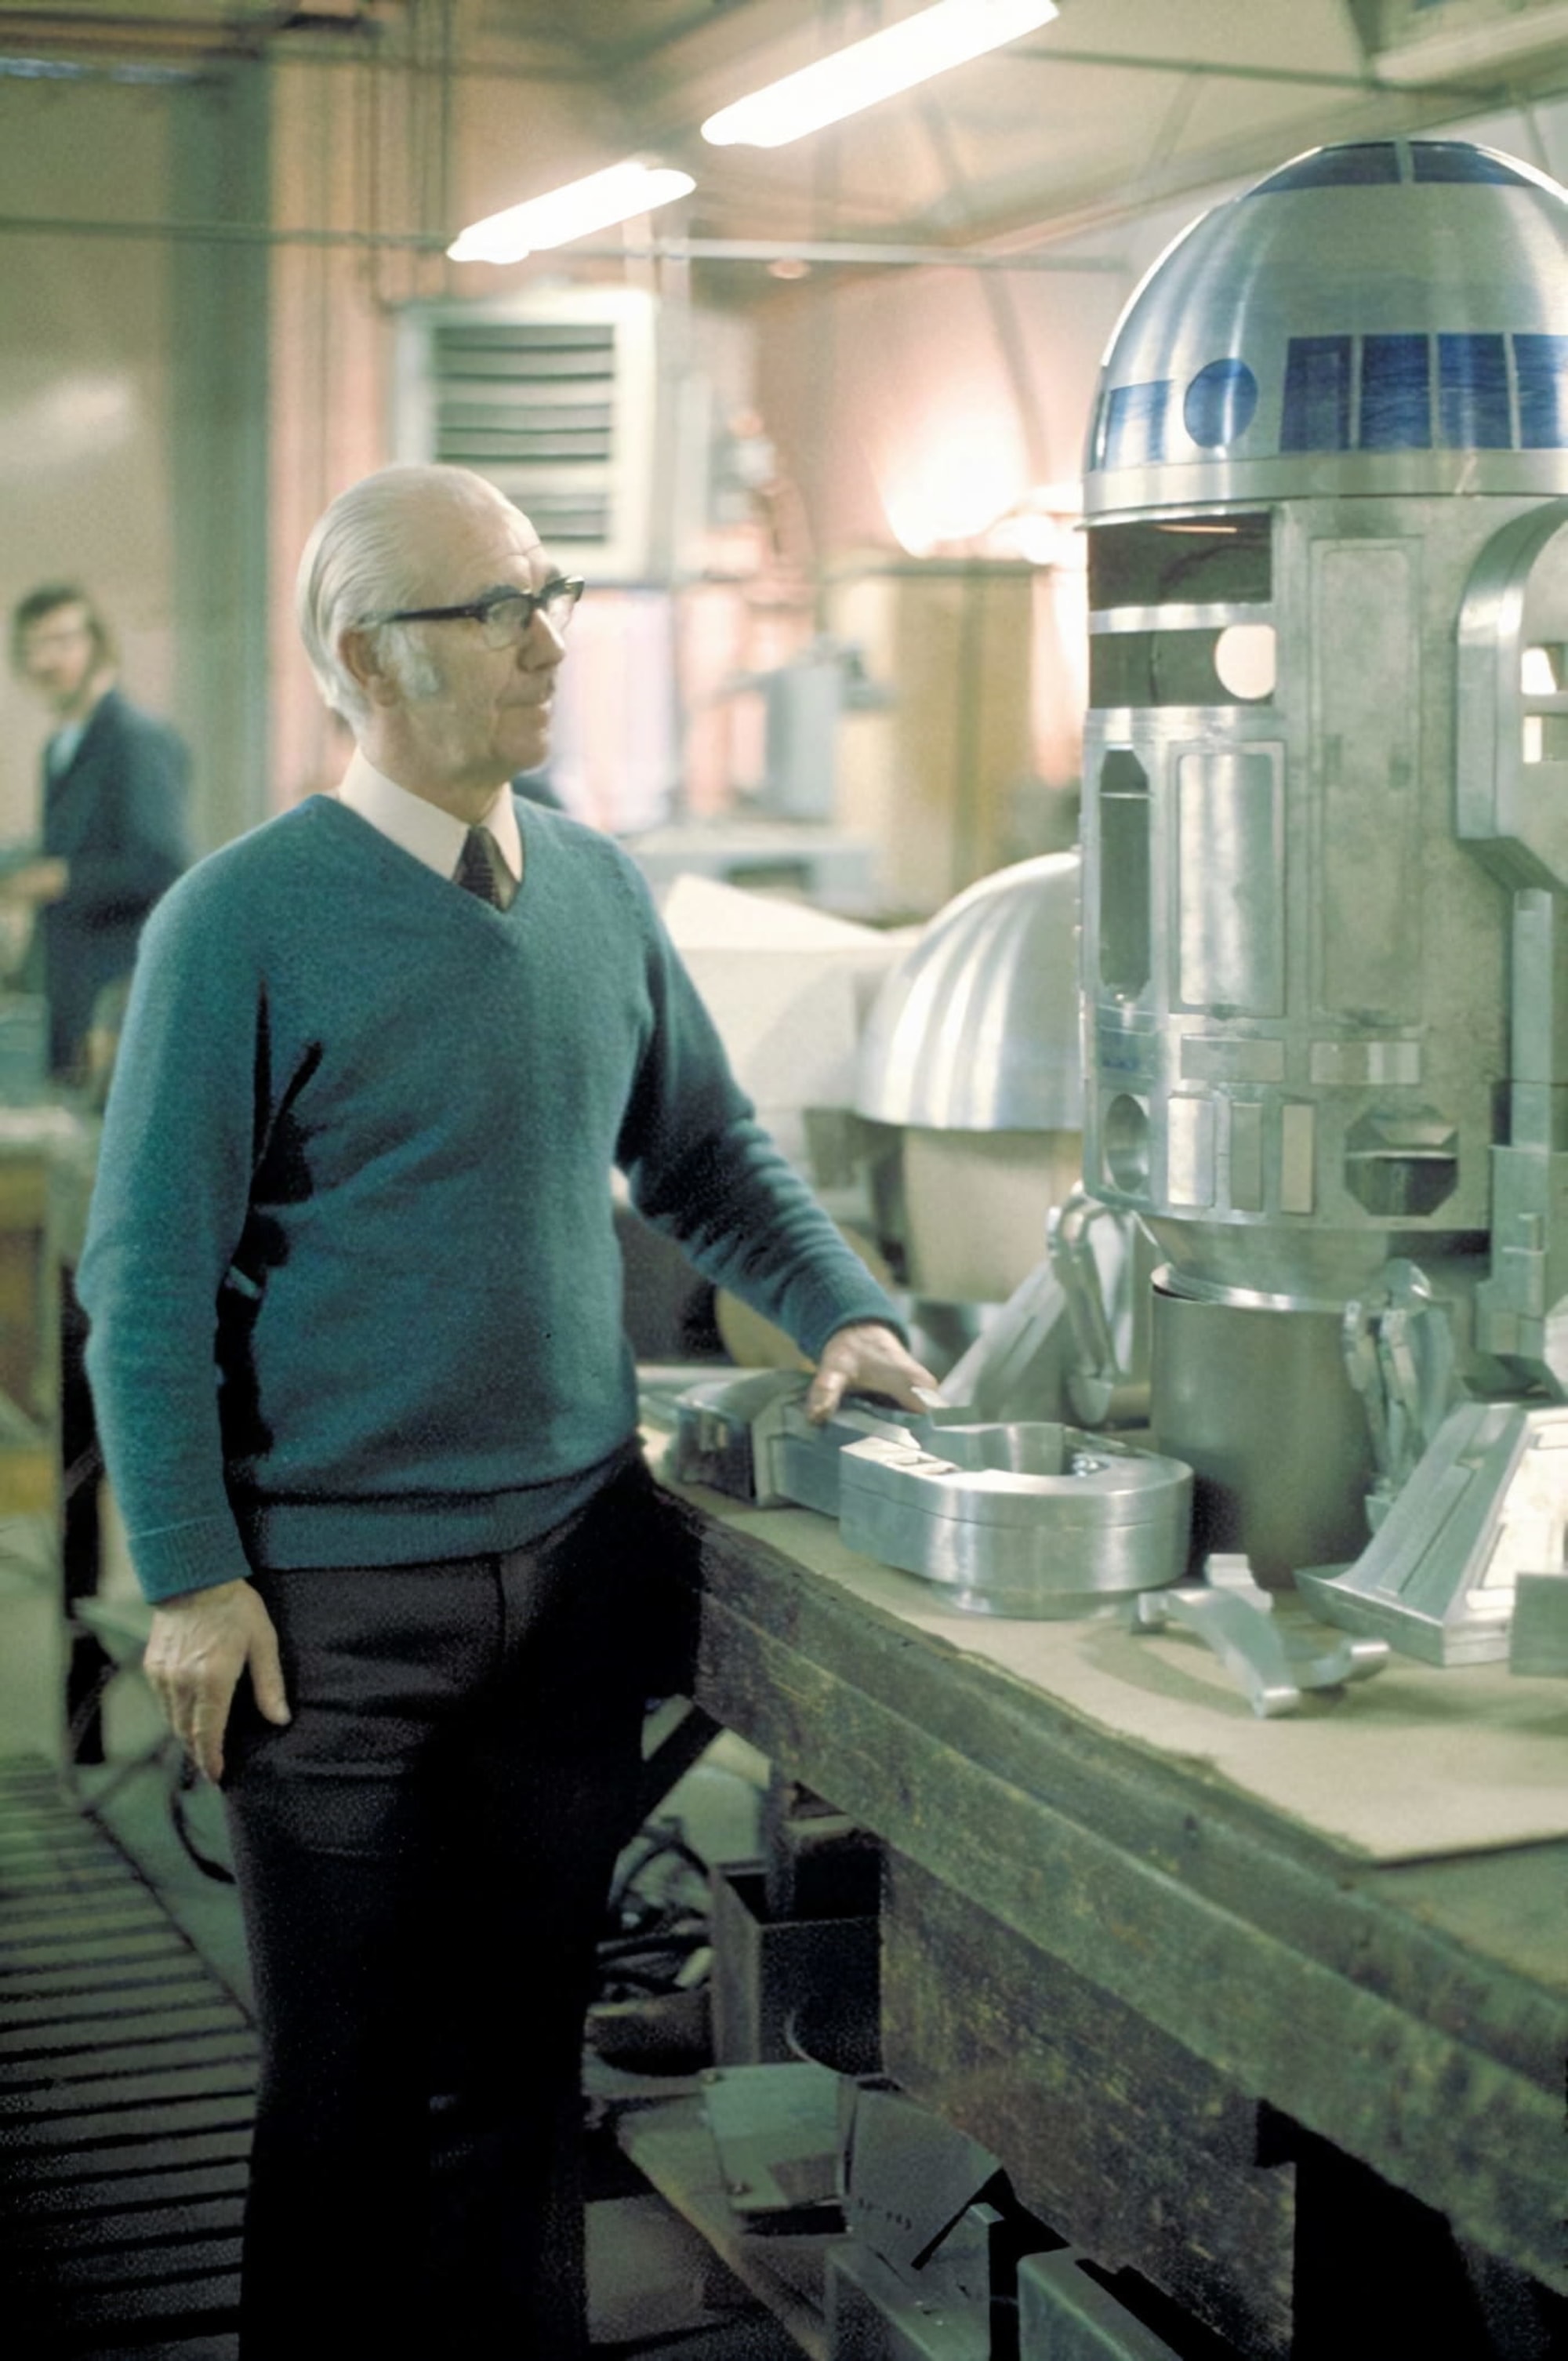 Jack Swinbank (my granddad) in front of an original R2-D2 that he helped construct